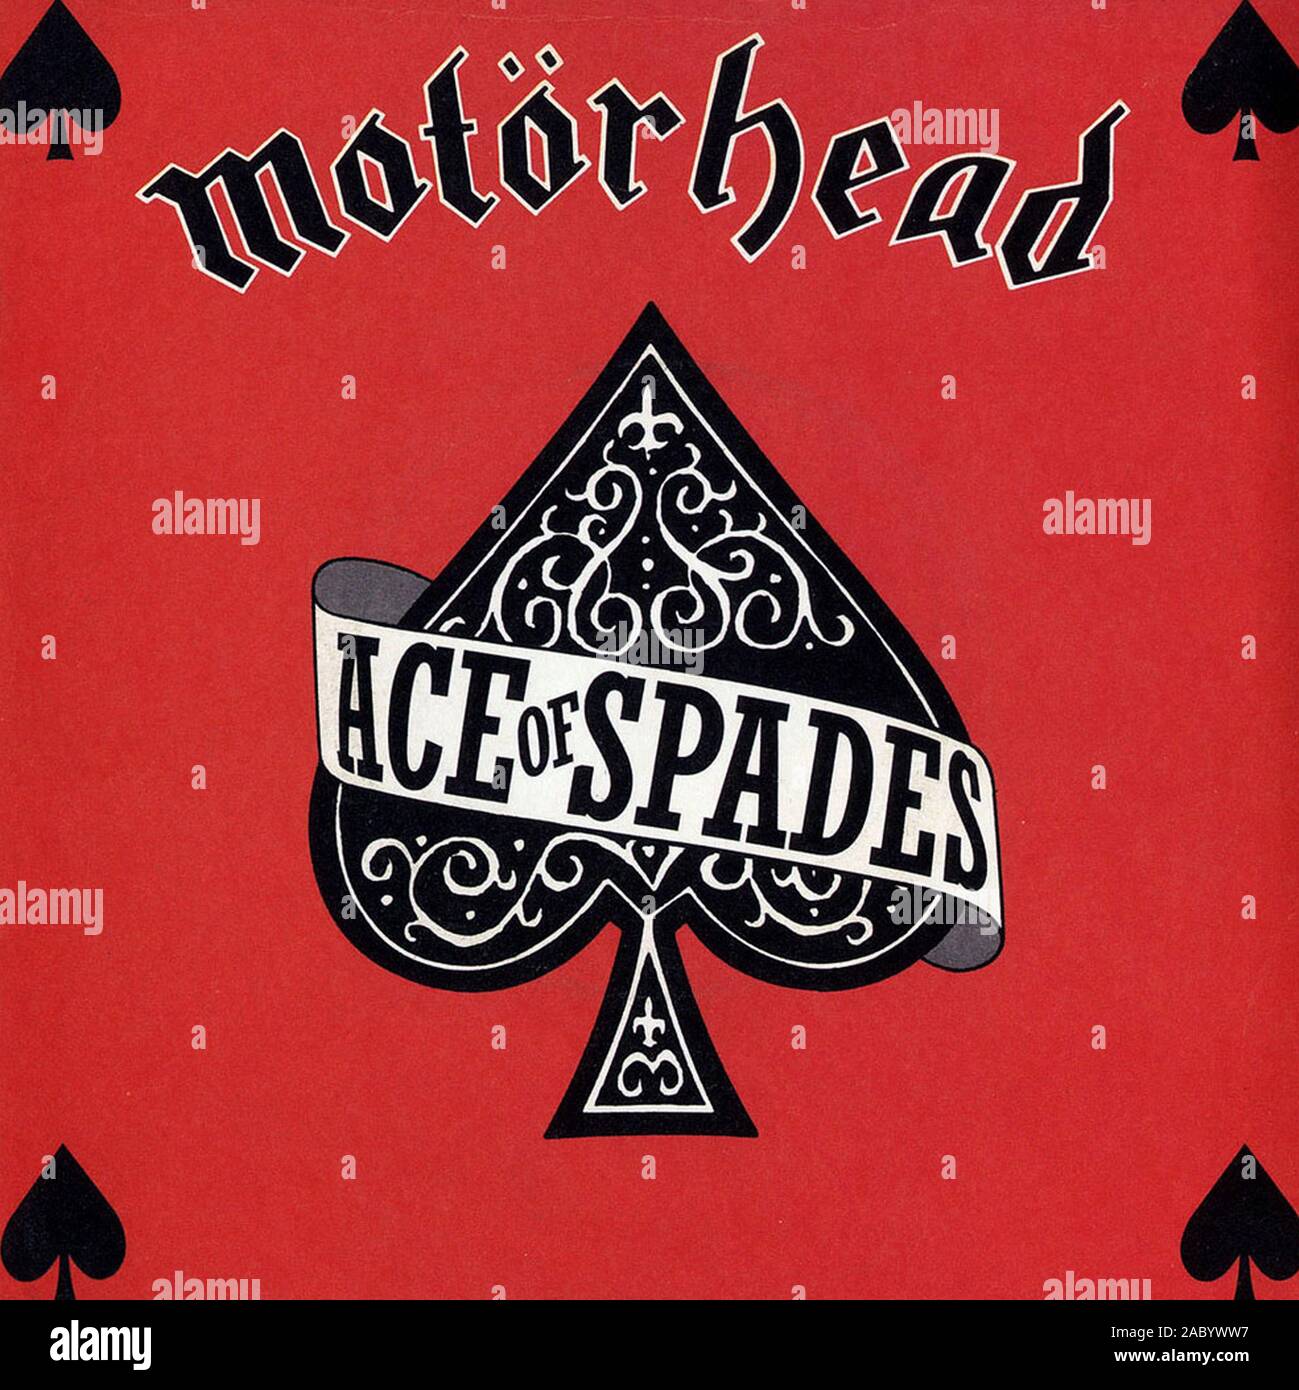 Motörhead - Ace Of Spades - Vintage vinyl album cover Stock Photo - Alamy